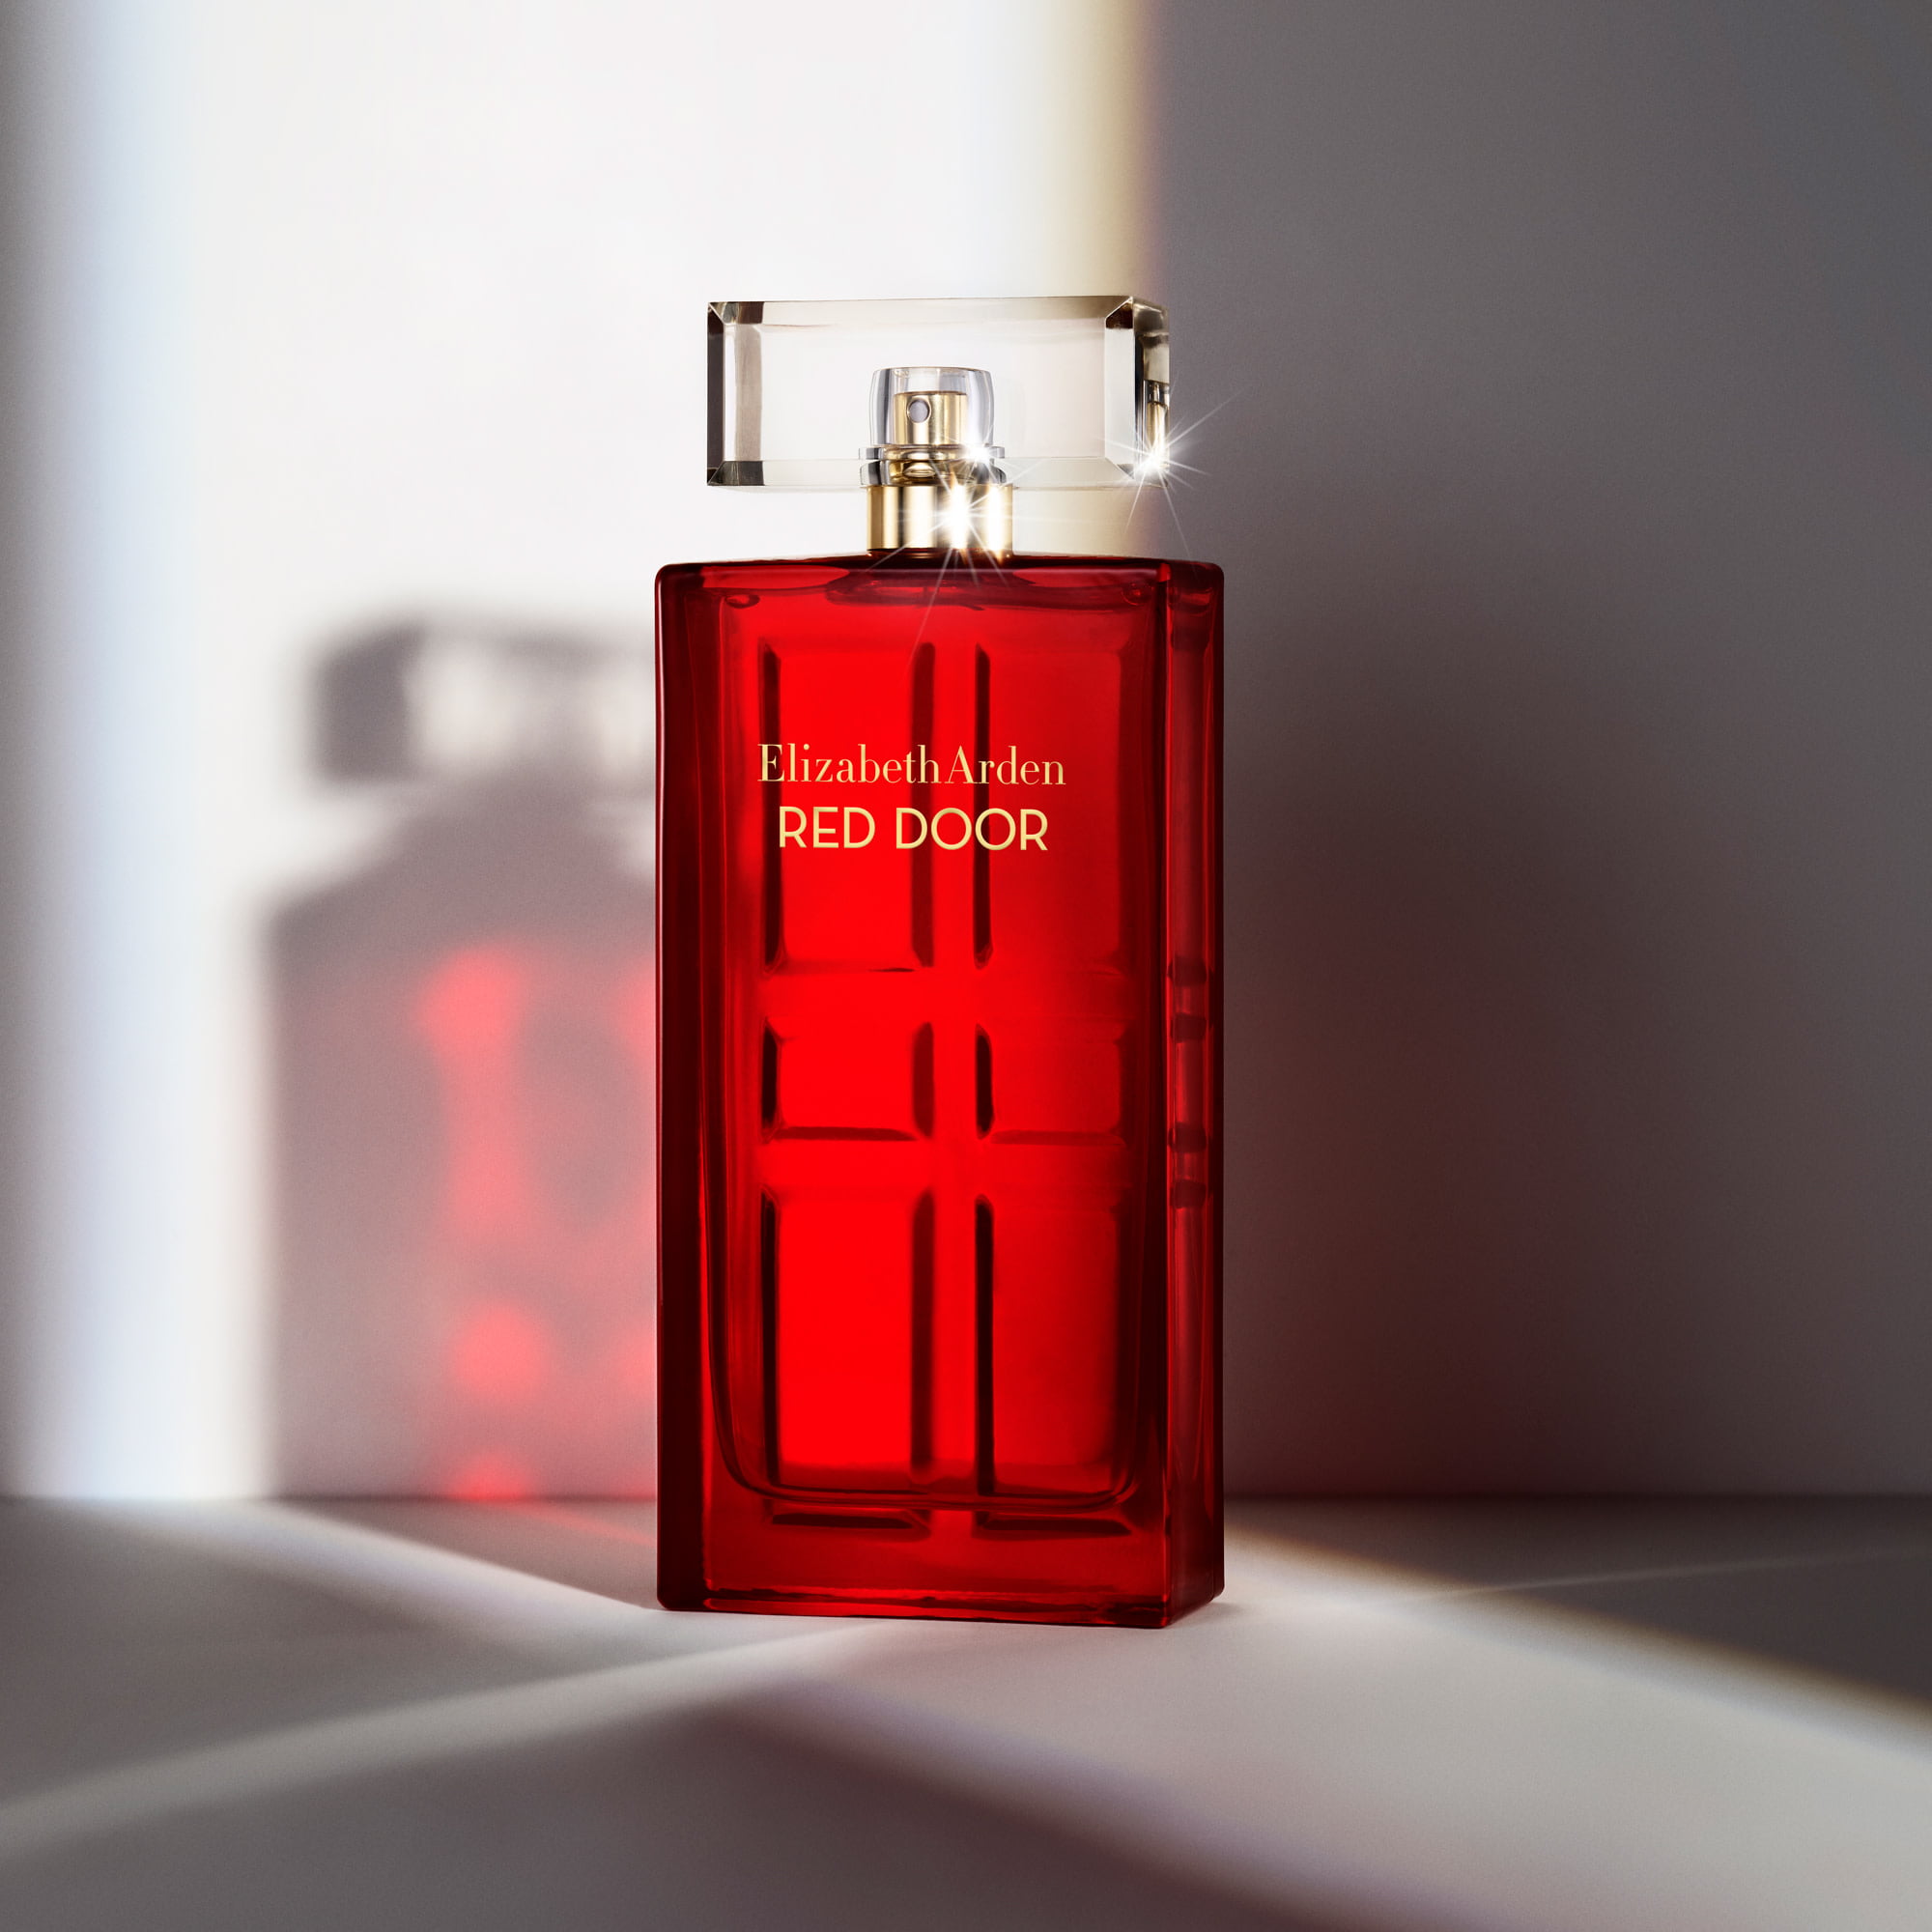 Elizabeth Arden Red Door Eau de Toilette, Perfume for Women, 3.3 fl oz - image 5 of 6